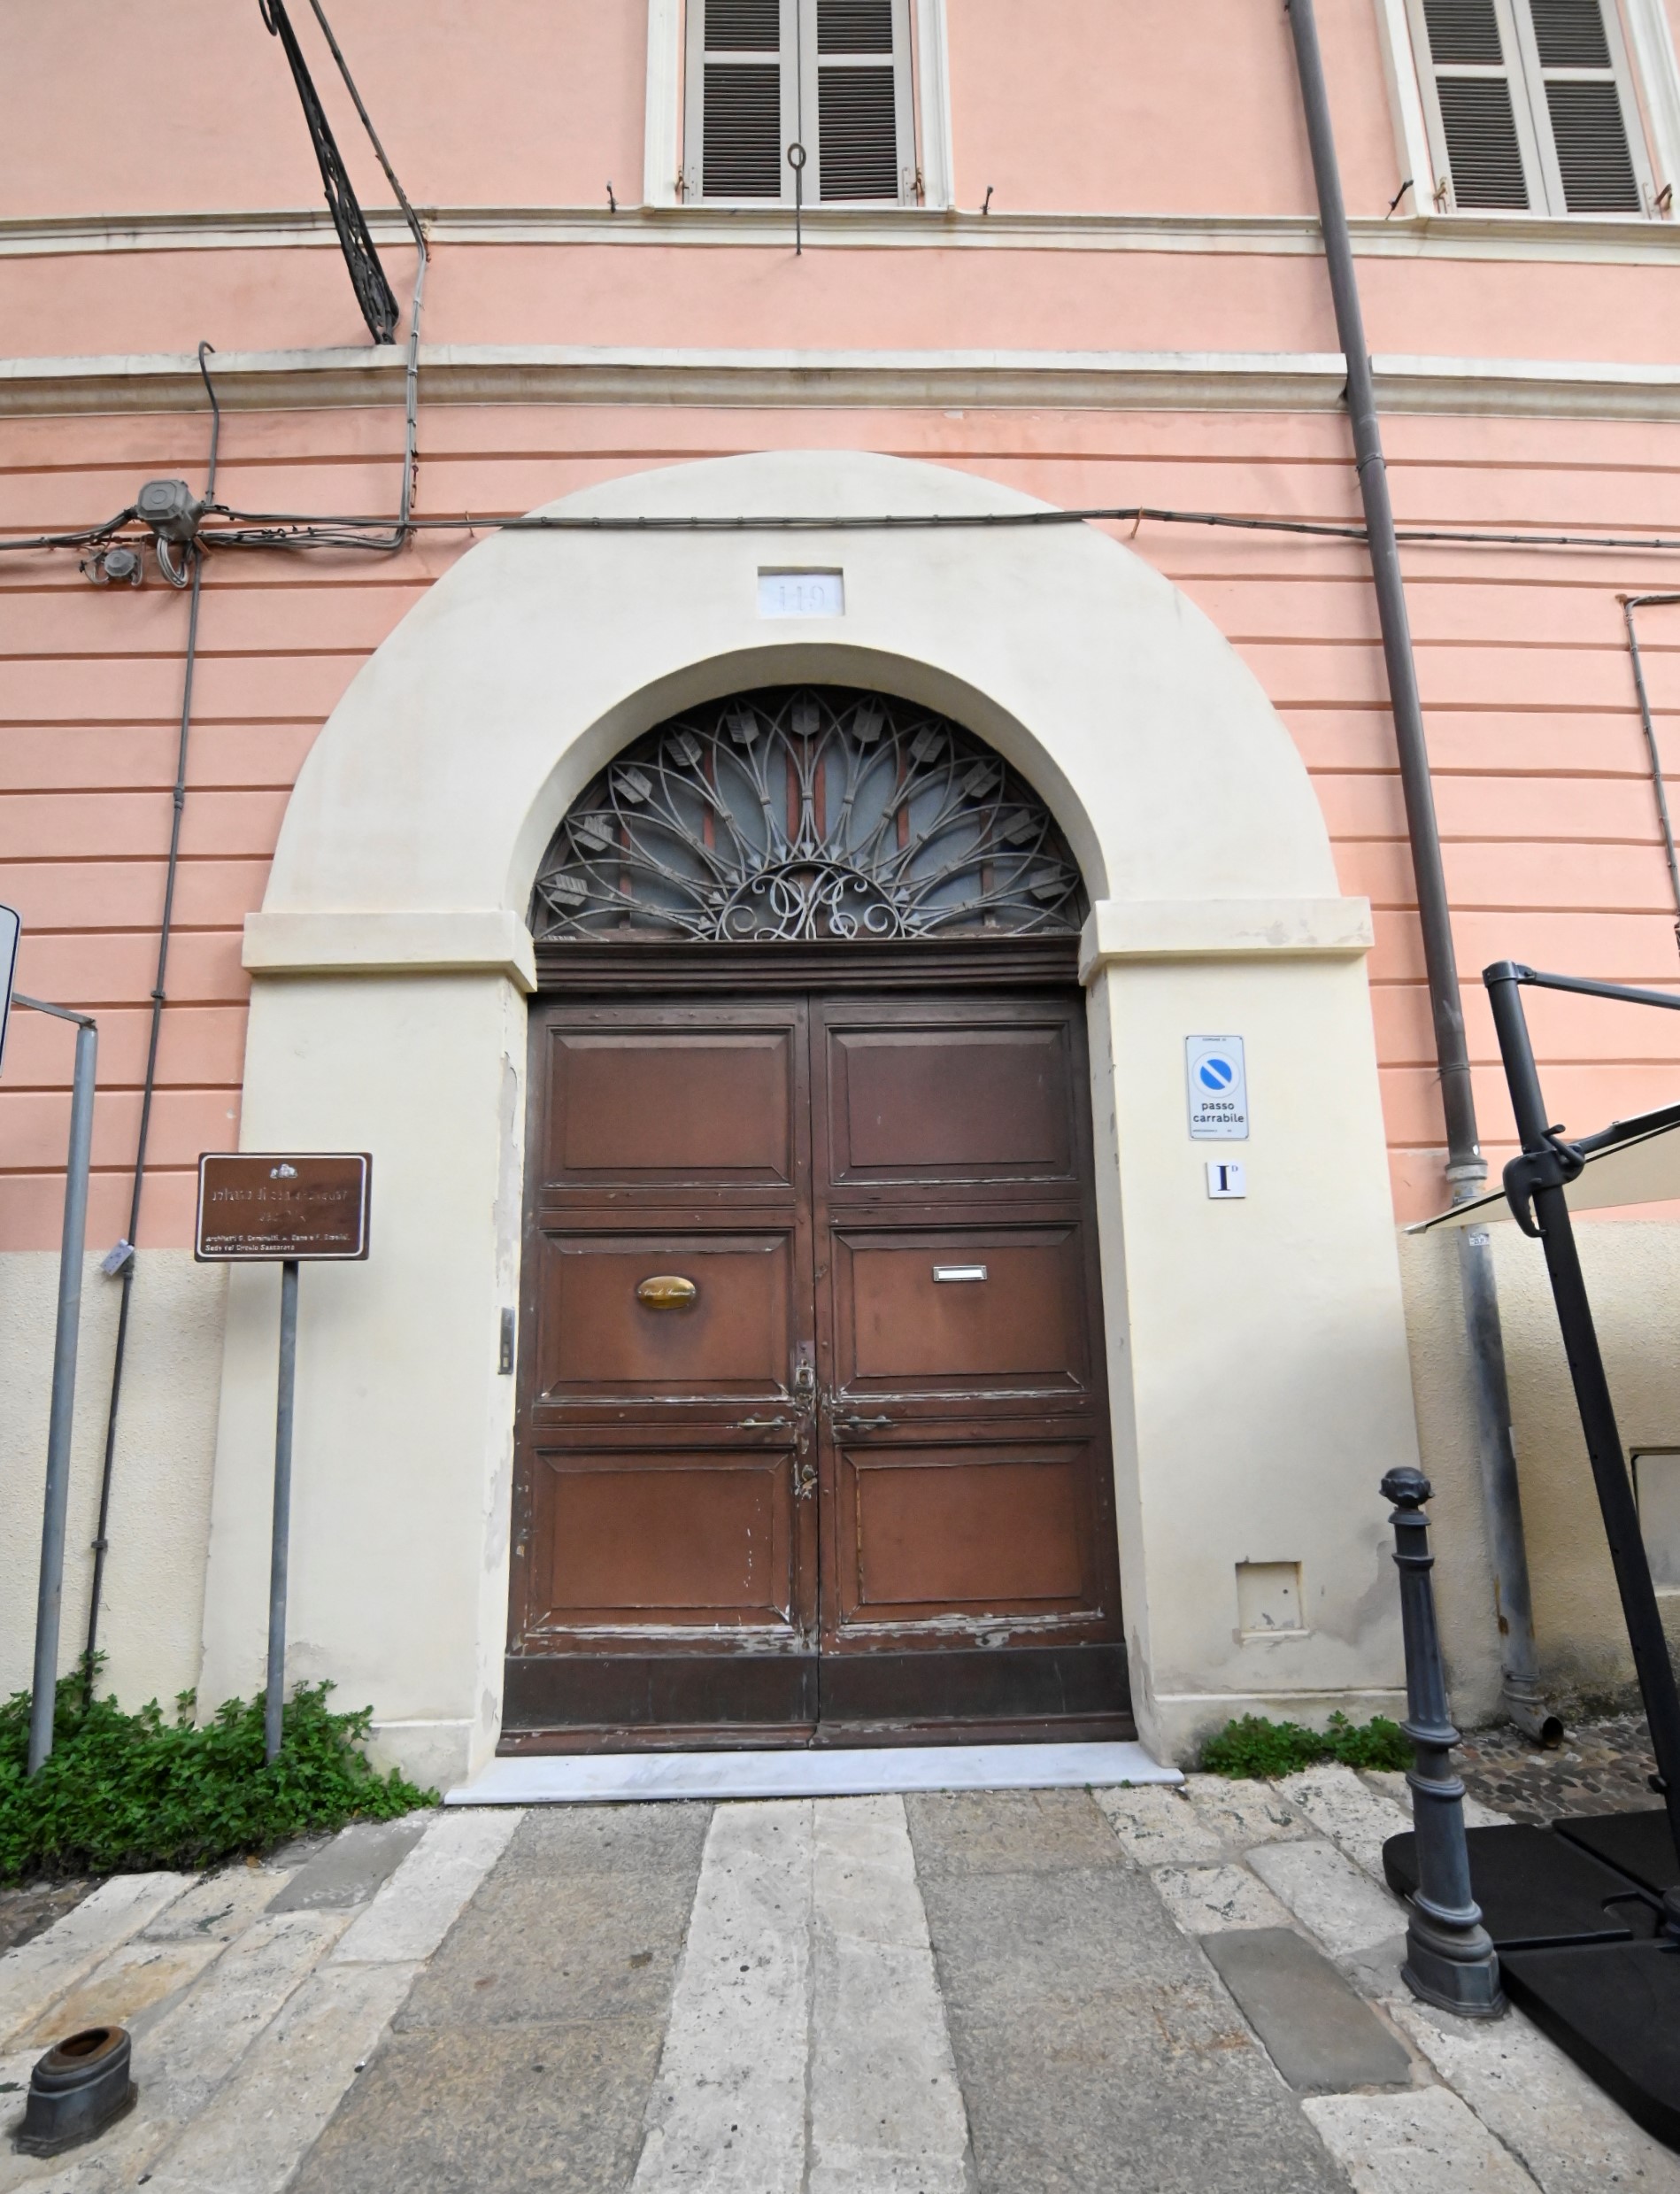 Palazzo s. sebastiano (palazzo, borghese)